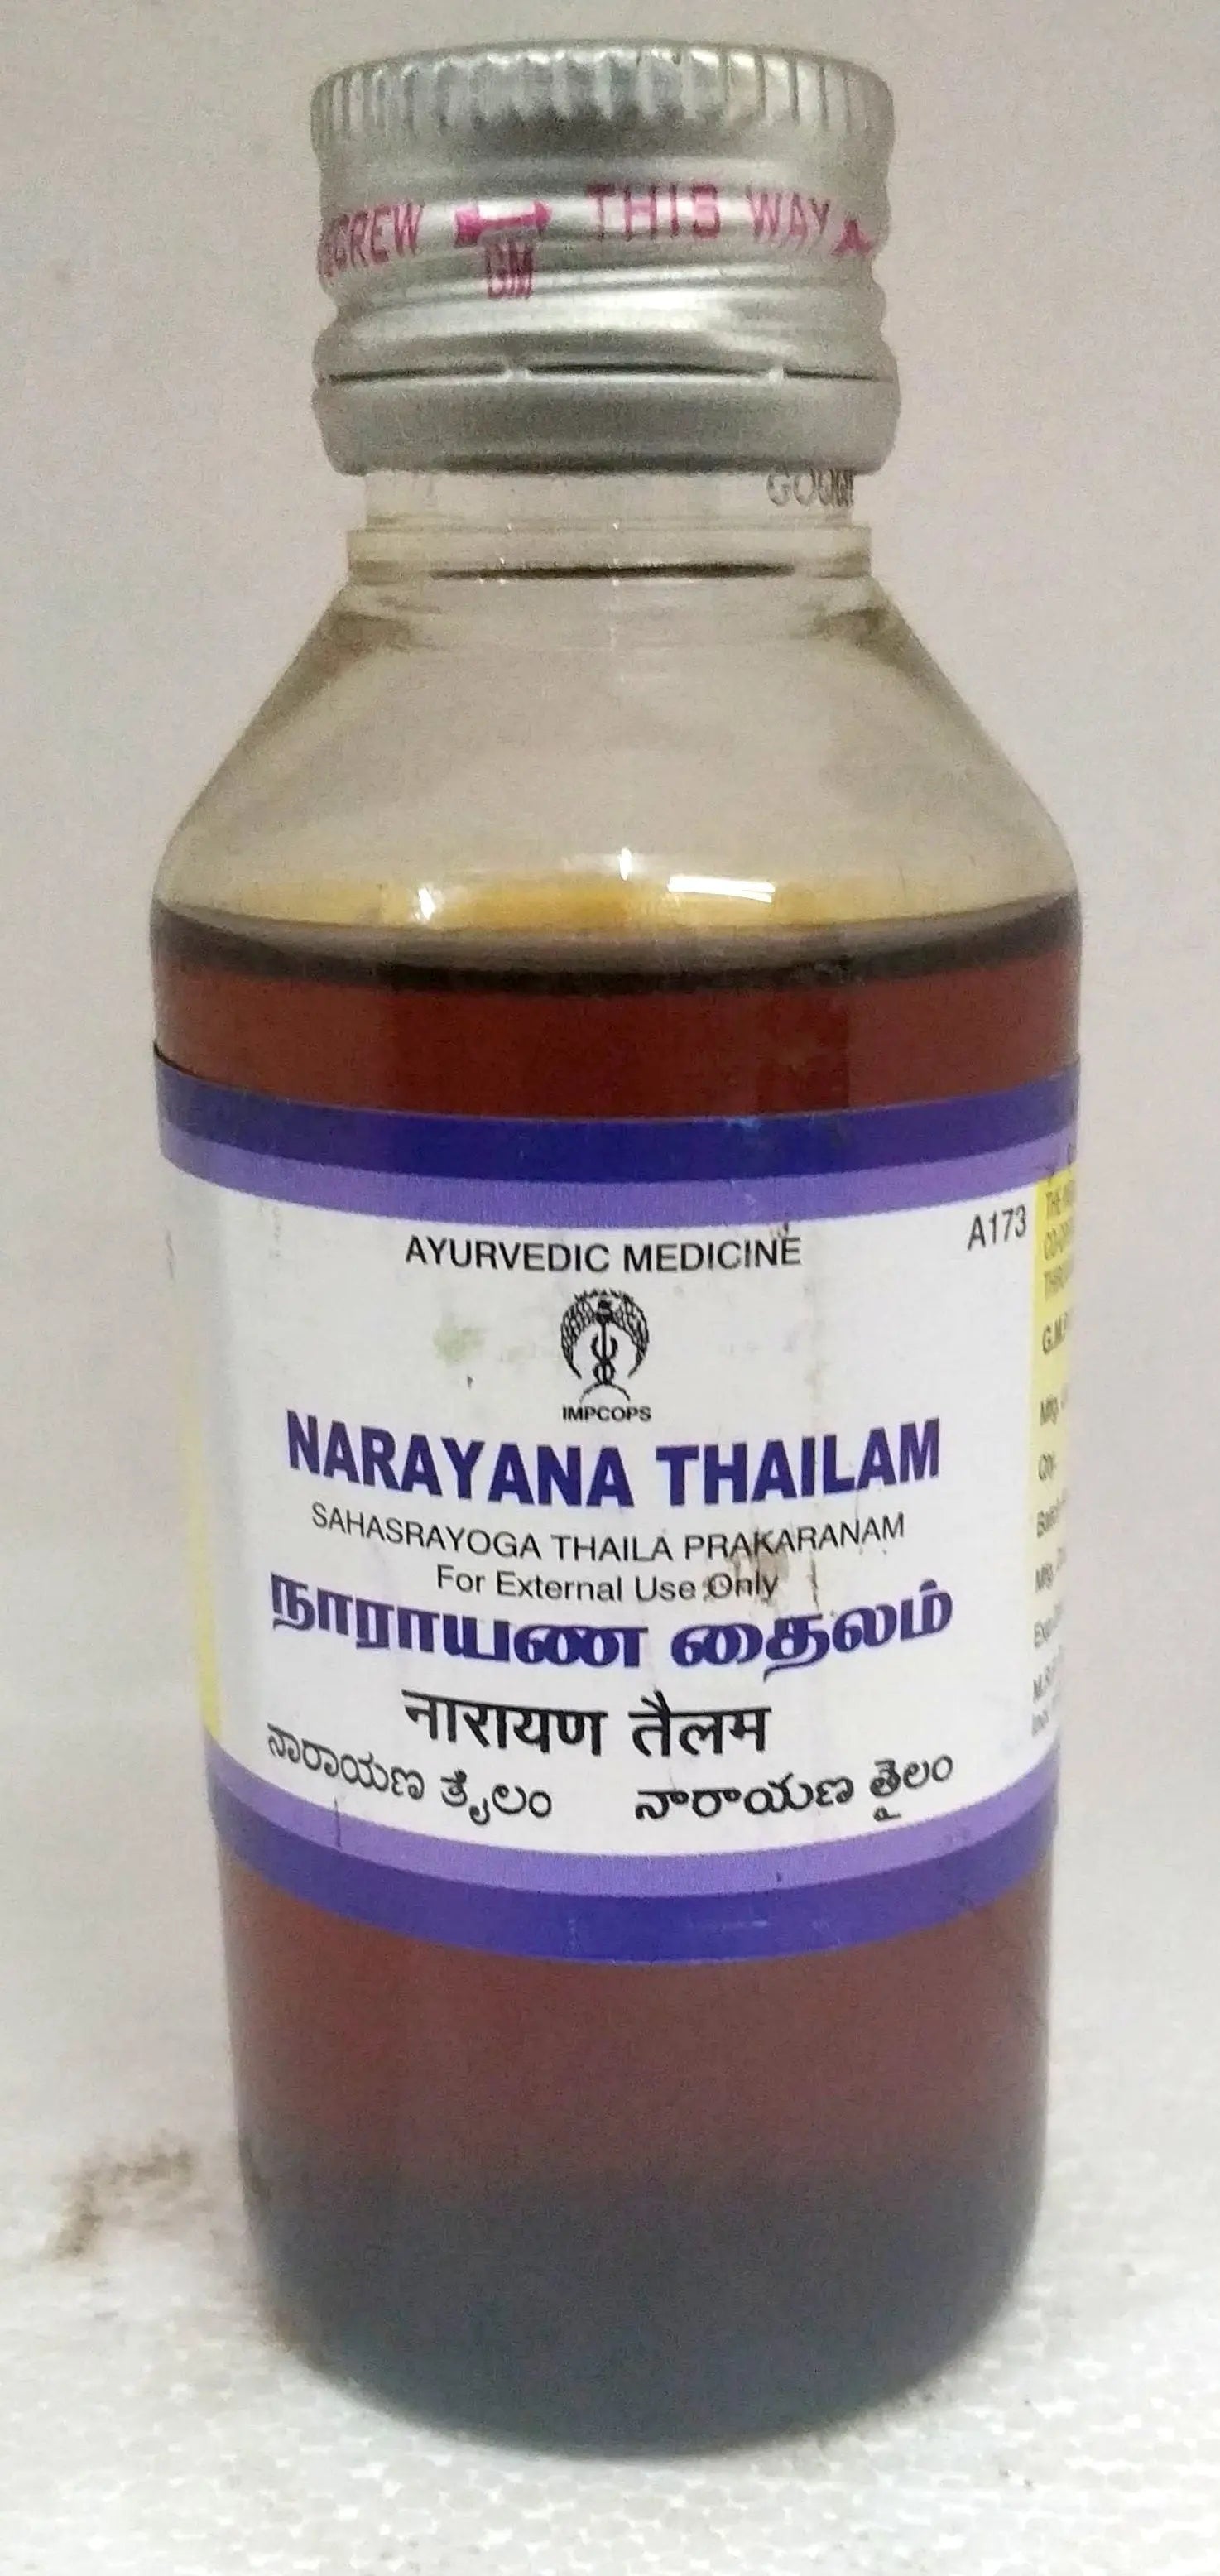 Impcops Narayana Thailam 100ml Impcops